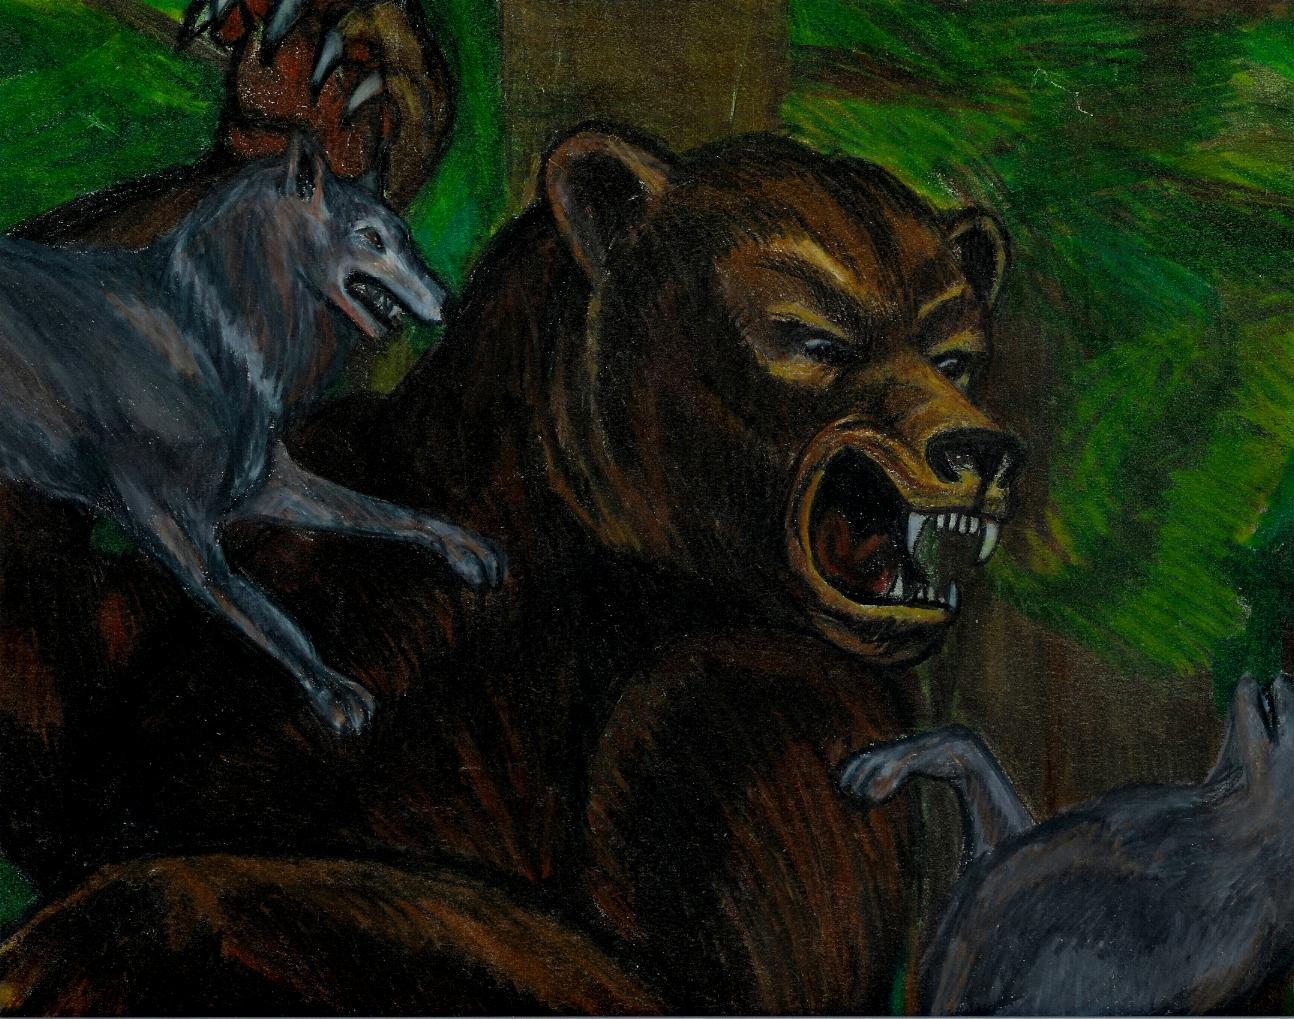 Bear vs. Wolves by purplegoldfish on DeviantArt